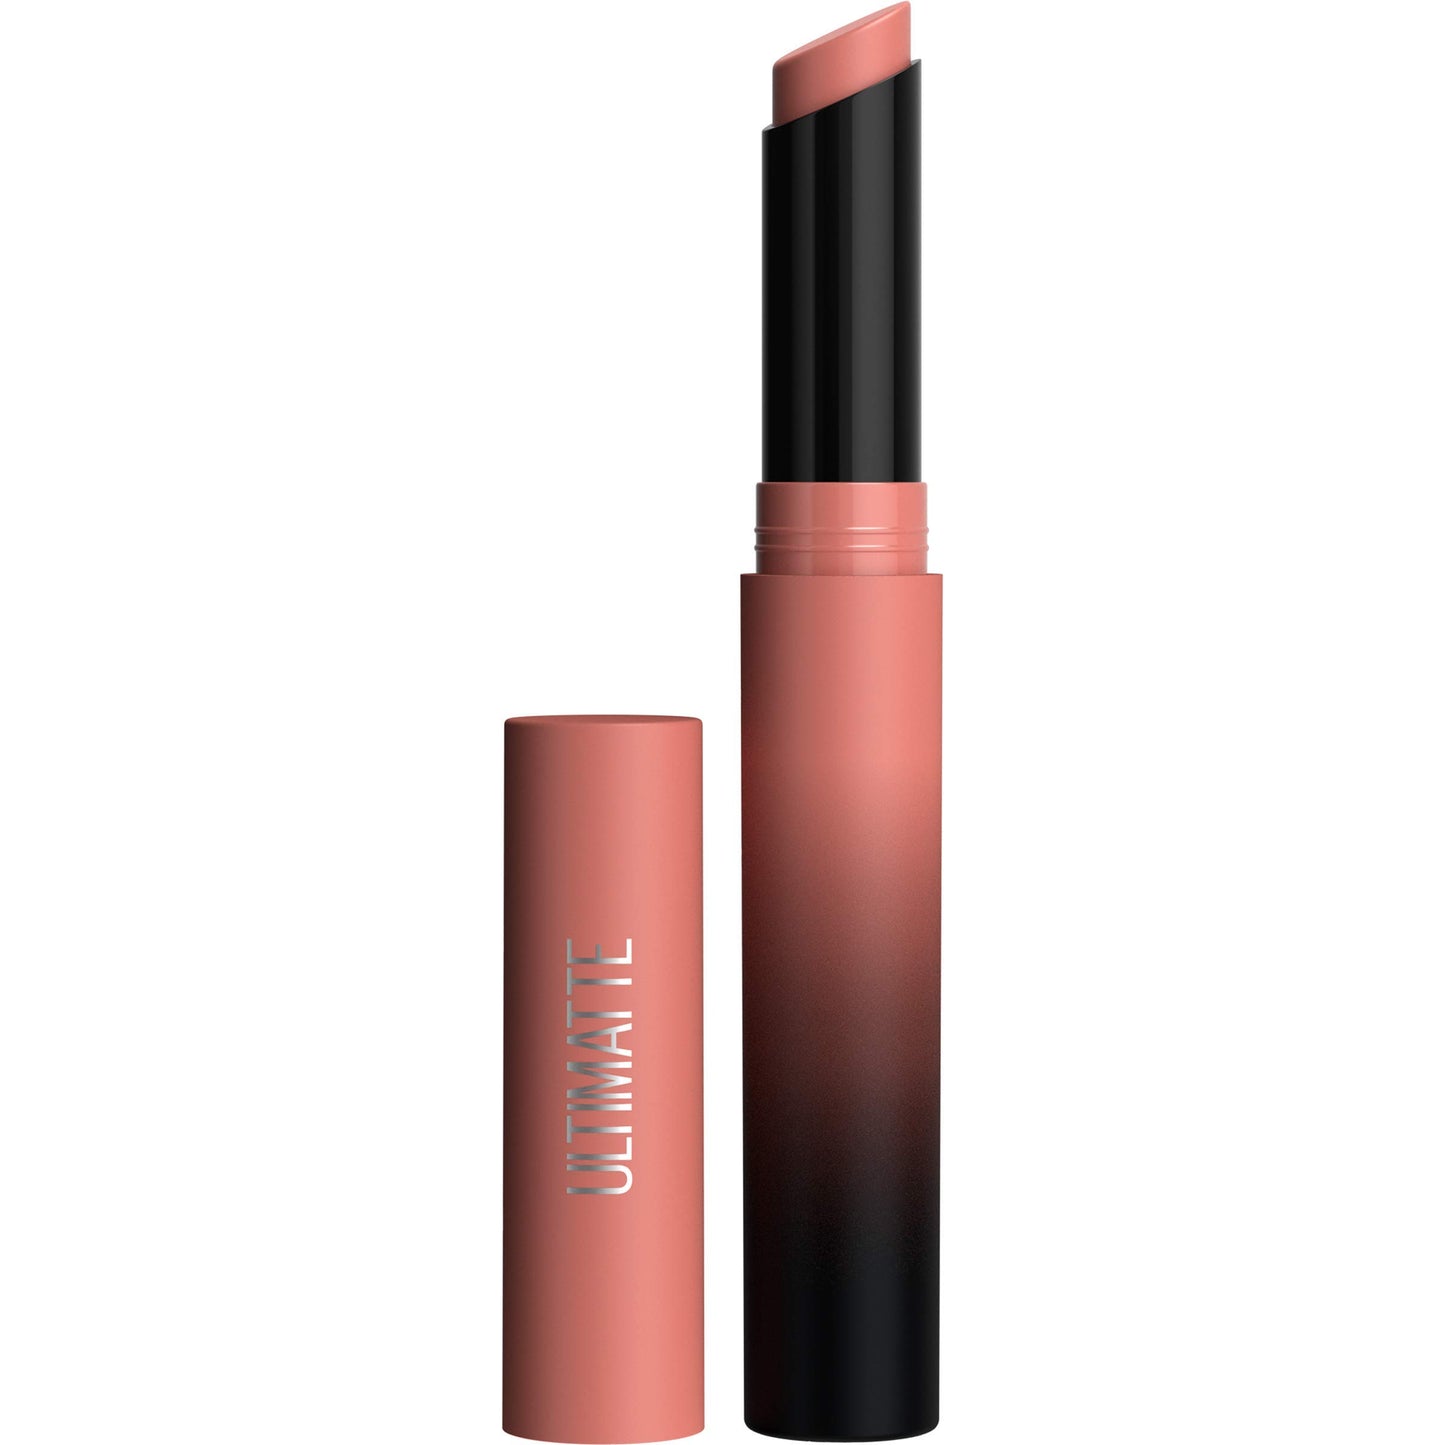 Maybelline New York Color Sensational Ultimatte Matte Lipstick, Non-Drying, Intense Color Pigment, More Buff, Pink Beige, 0.06 oz